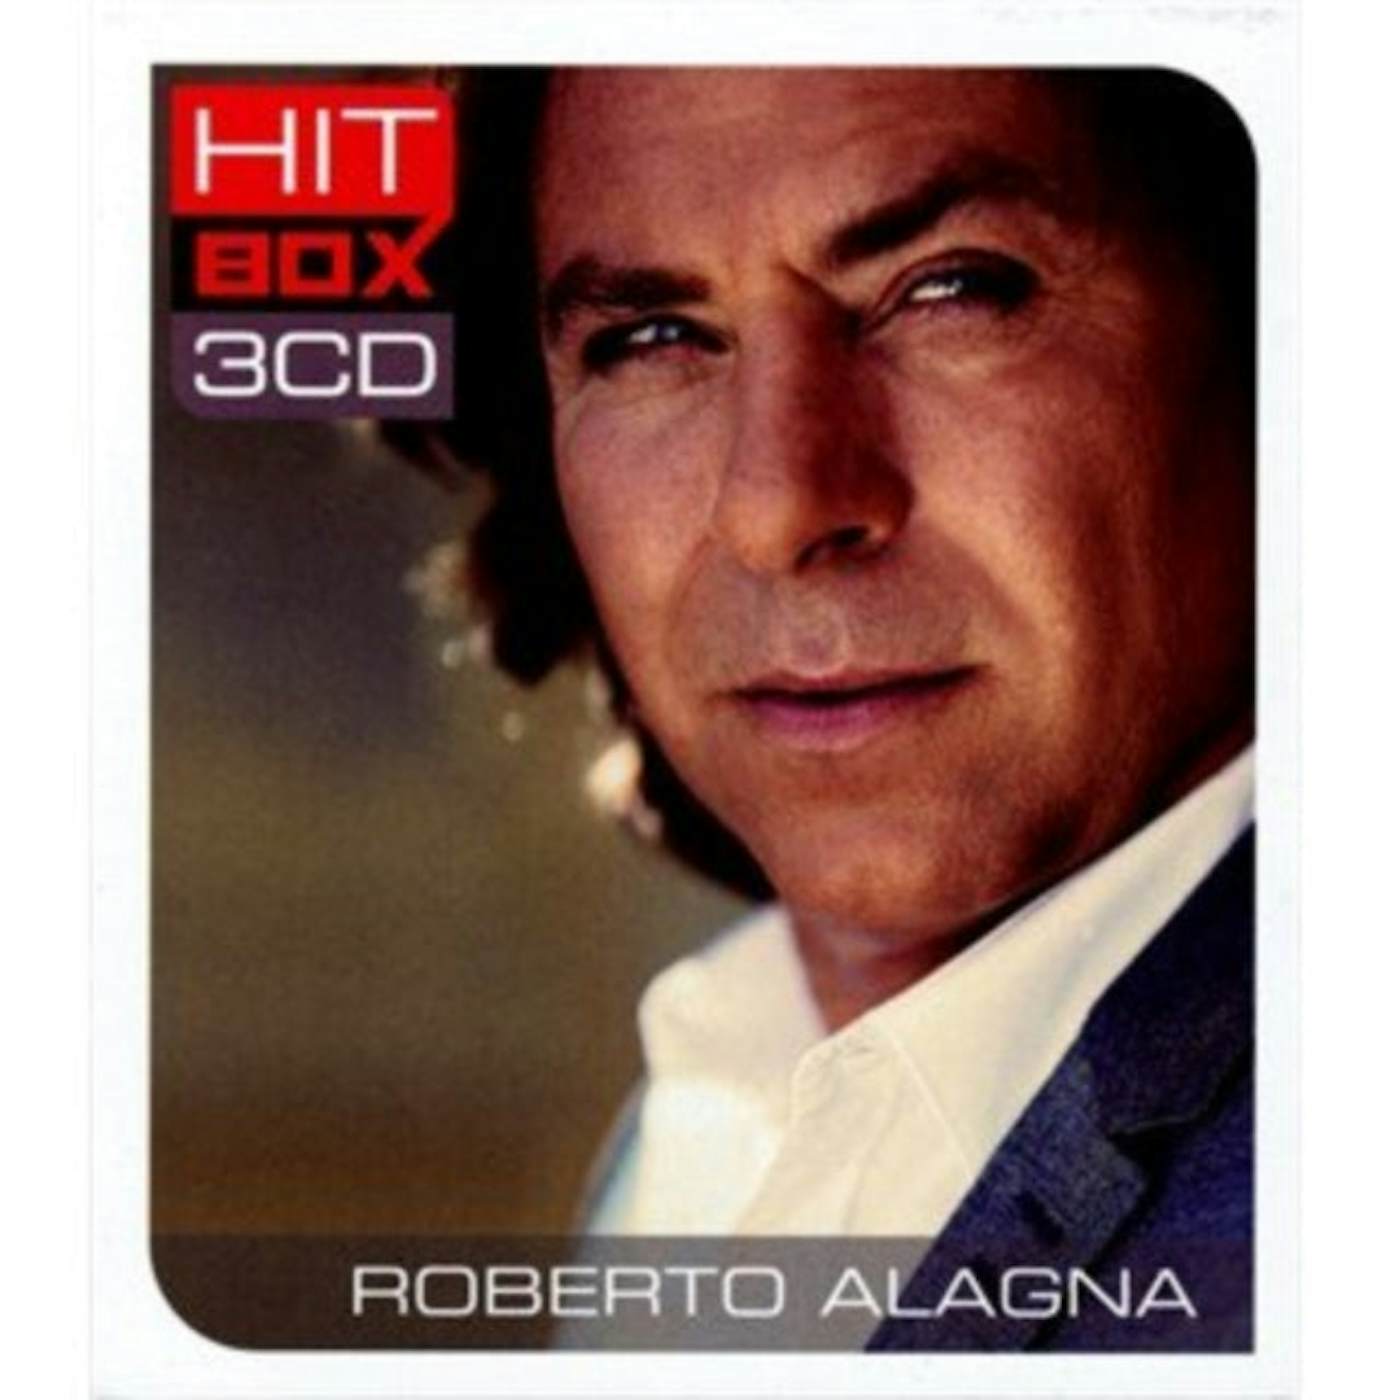 Roberto Alagna CD - The Very Best